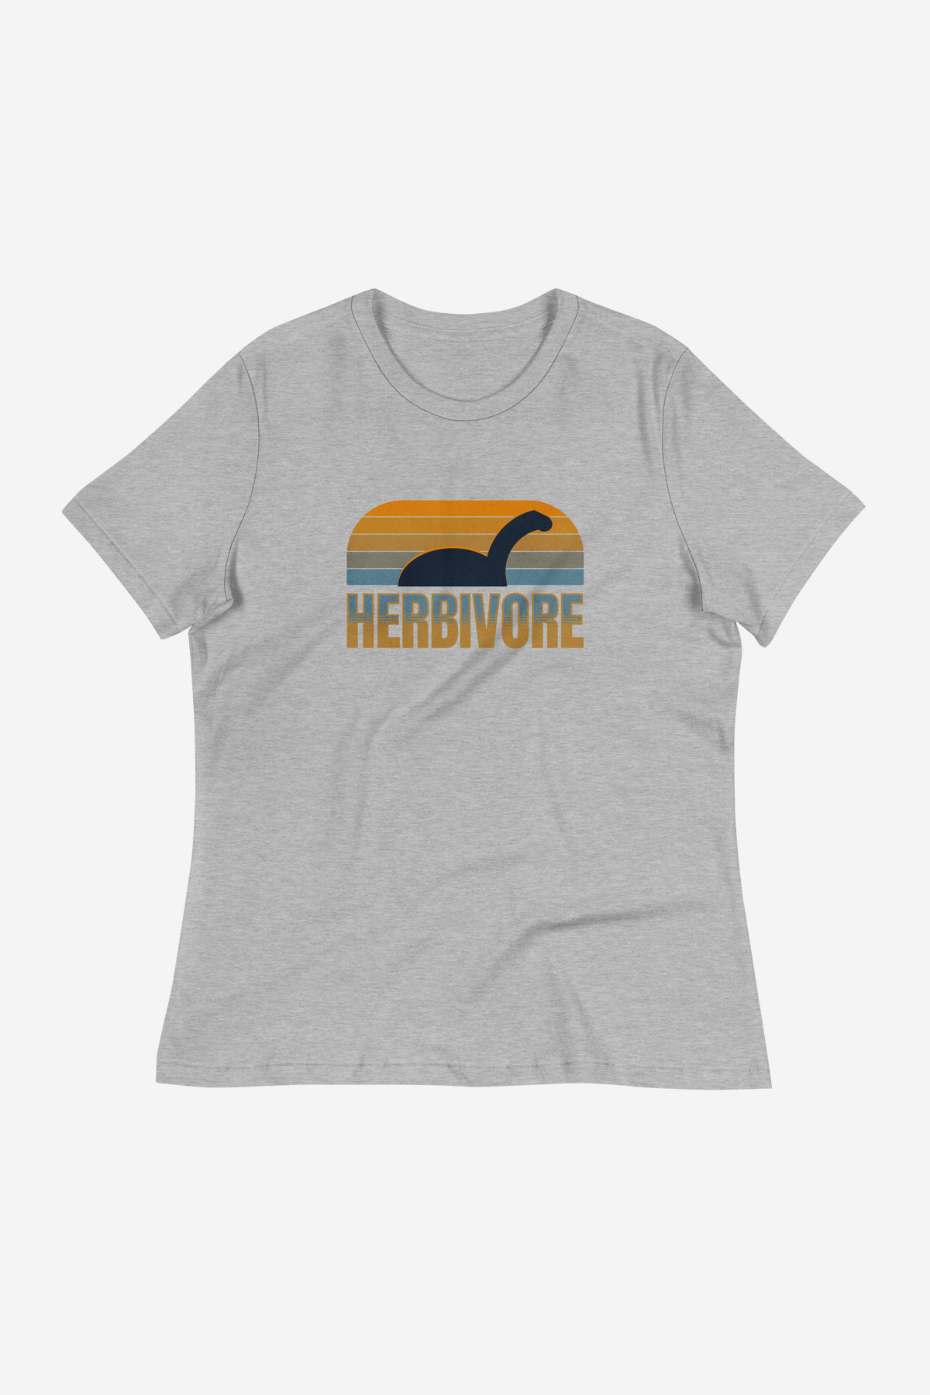 Herbivore Dino Women's Relaxed T-Shirt